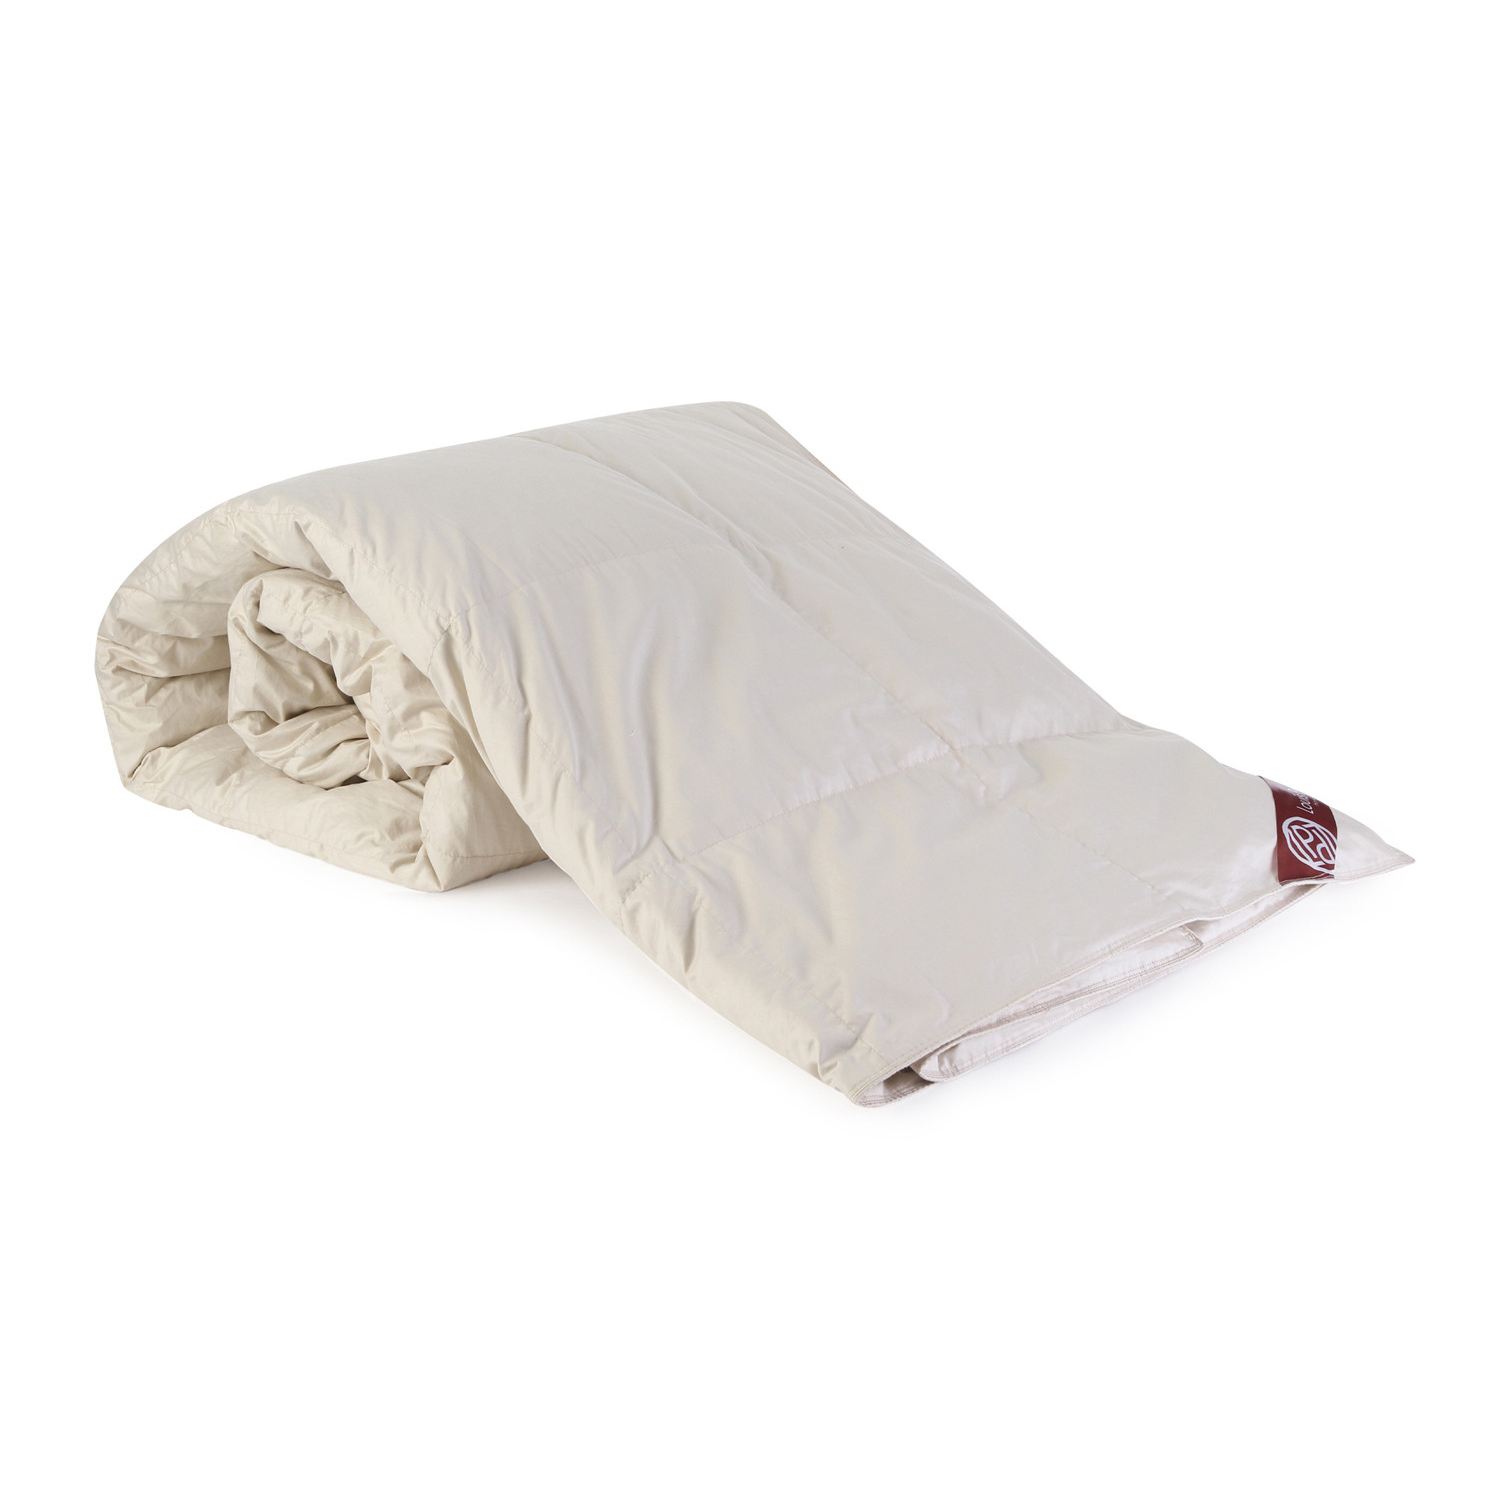 пуховое одеяло louis pascal камилла белое 200х220 см лп2034 Пуховое одеяло Louis Pascal Николь бежевое 140х205 см (ЛП2022)